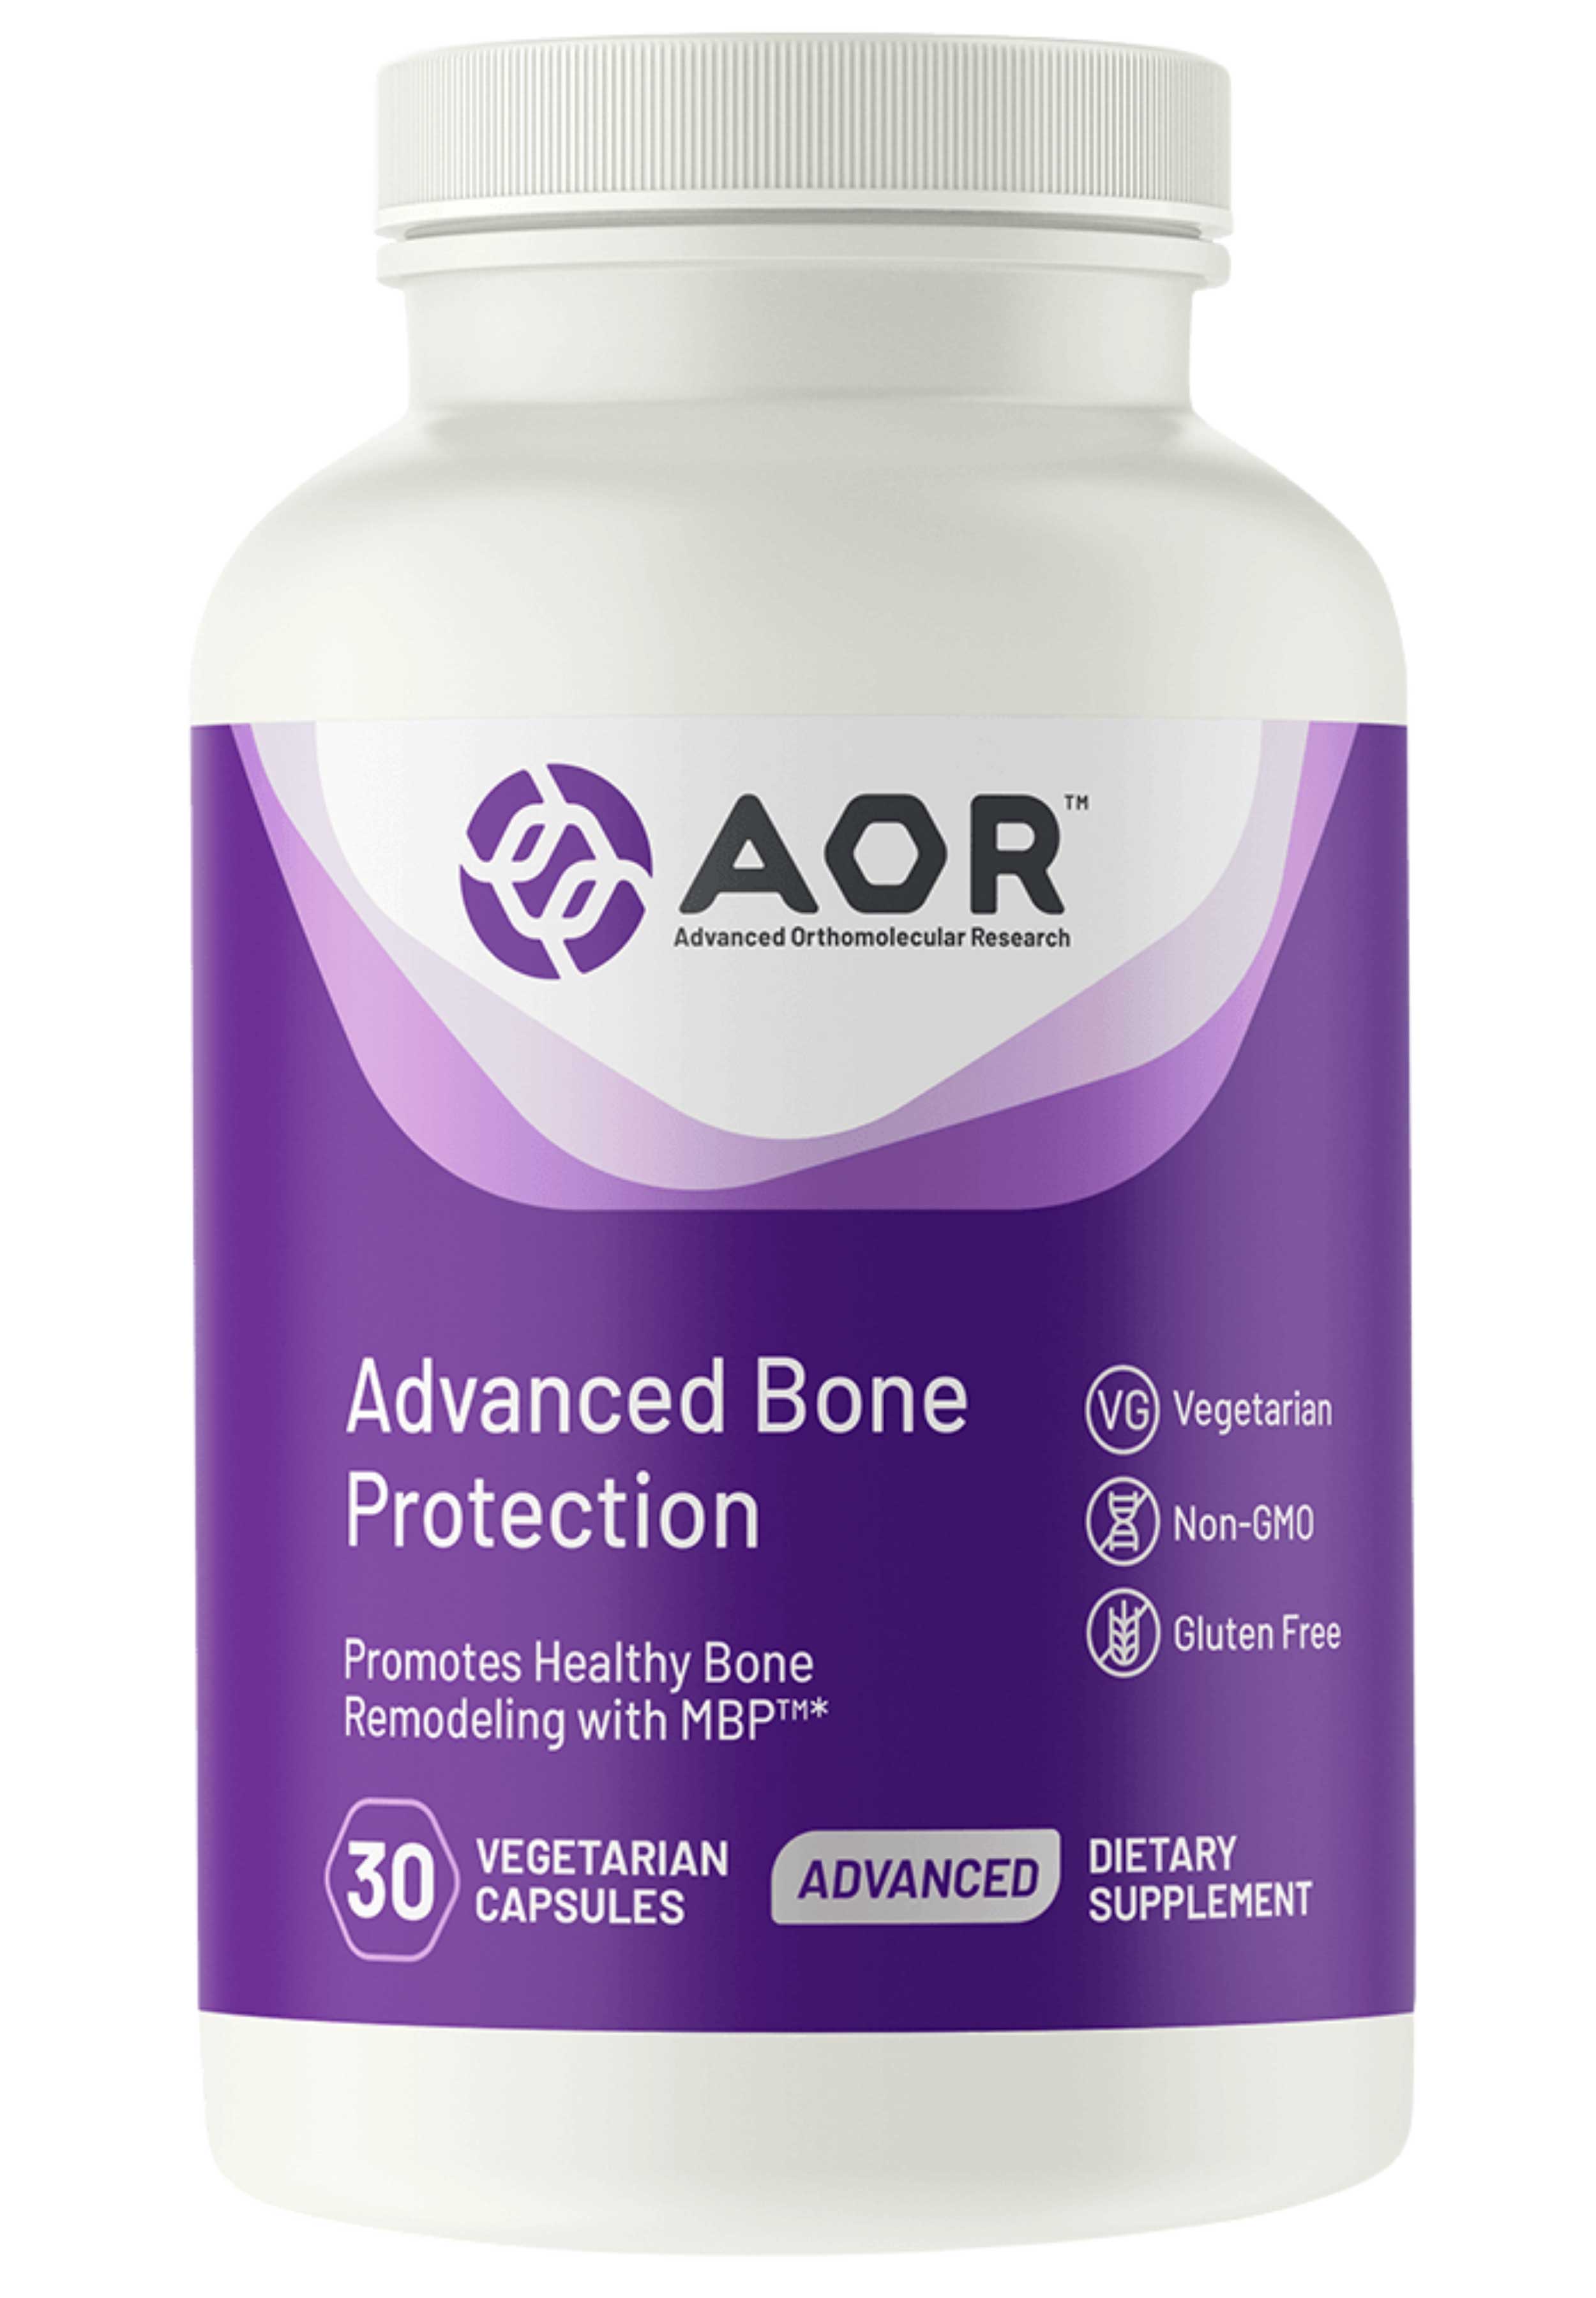 Advanced Orthomolecular Research Advanced Bone Protection